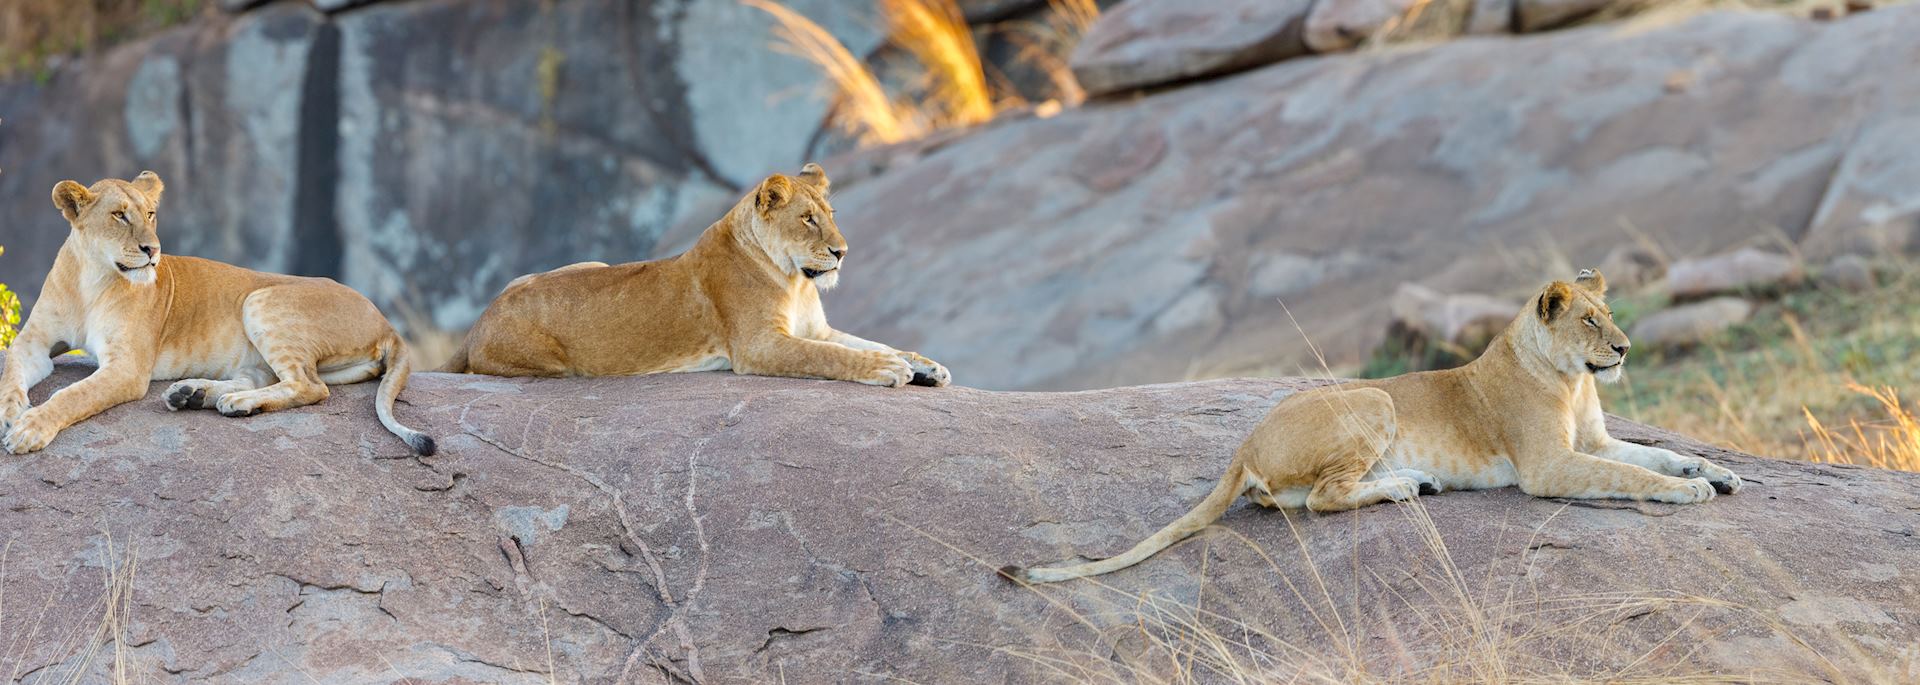 Lion in the Serengeti, Tanzania